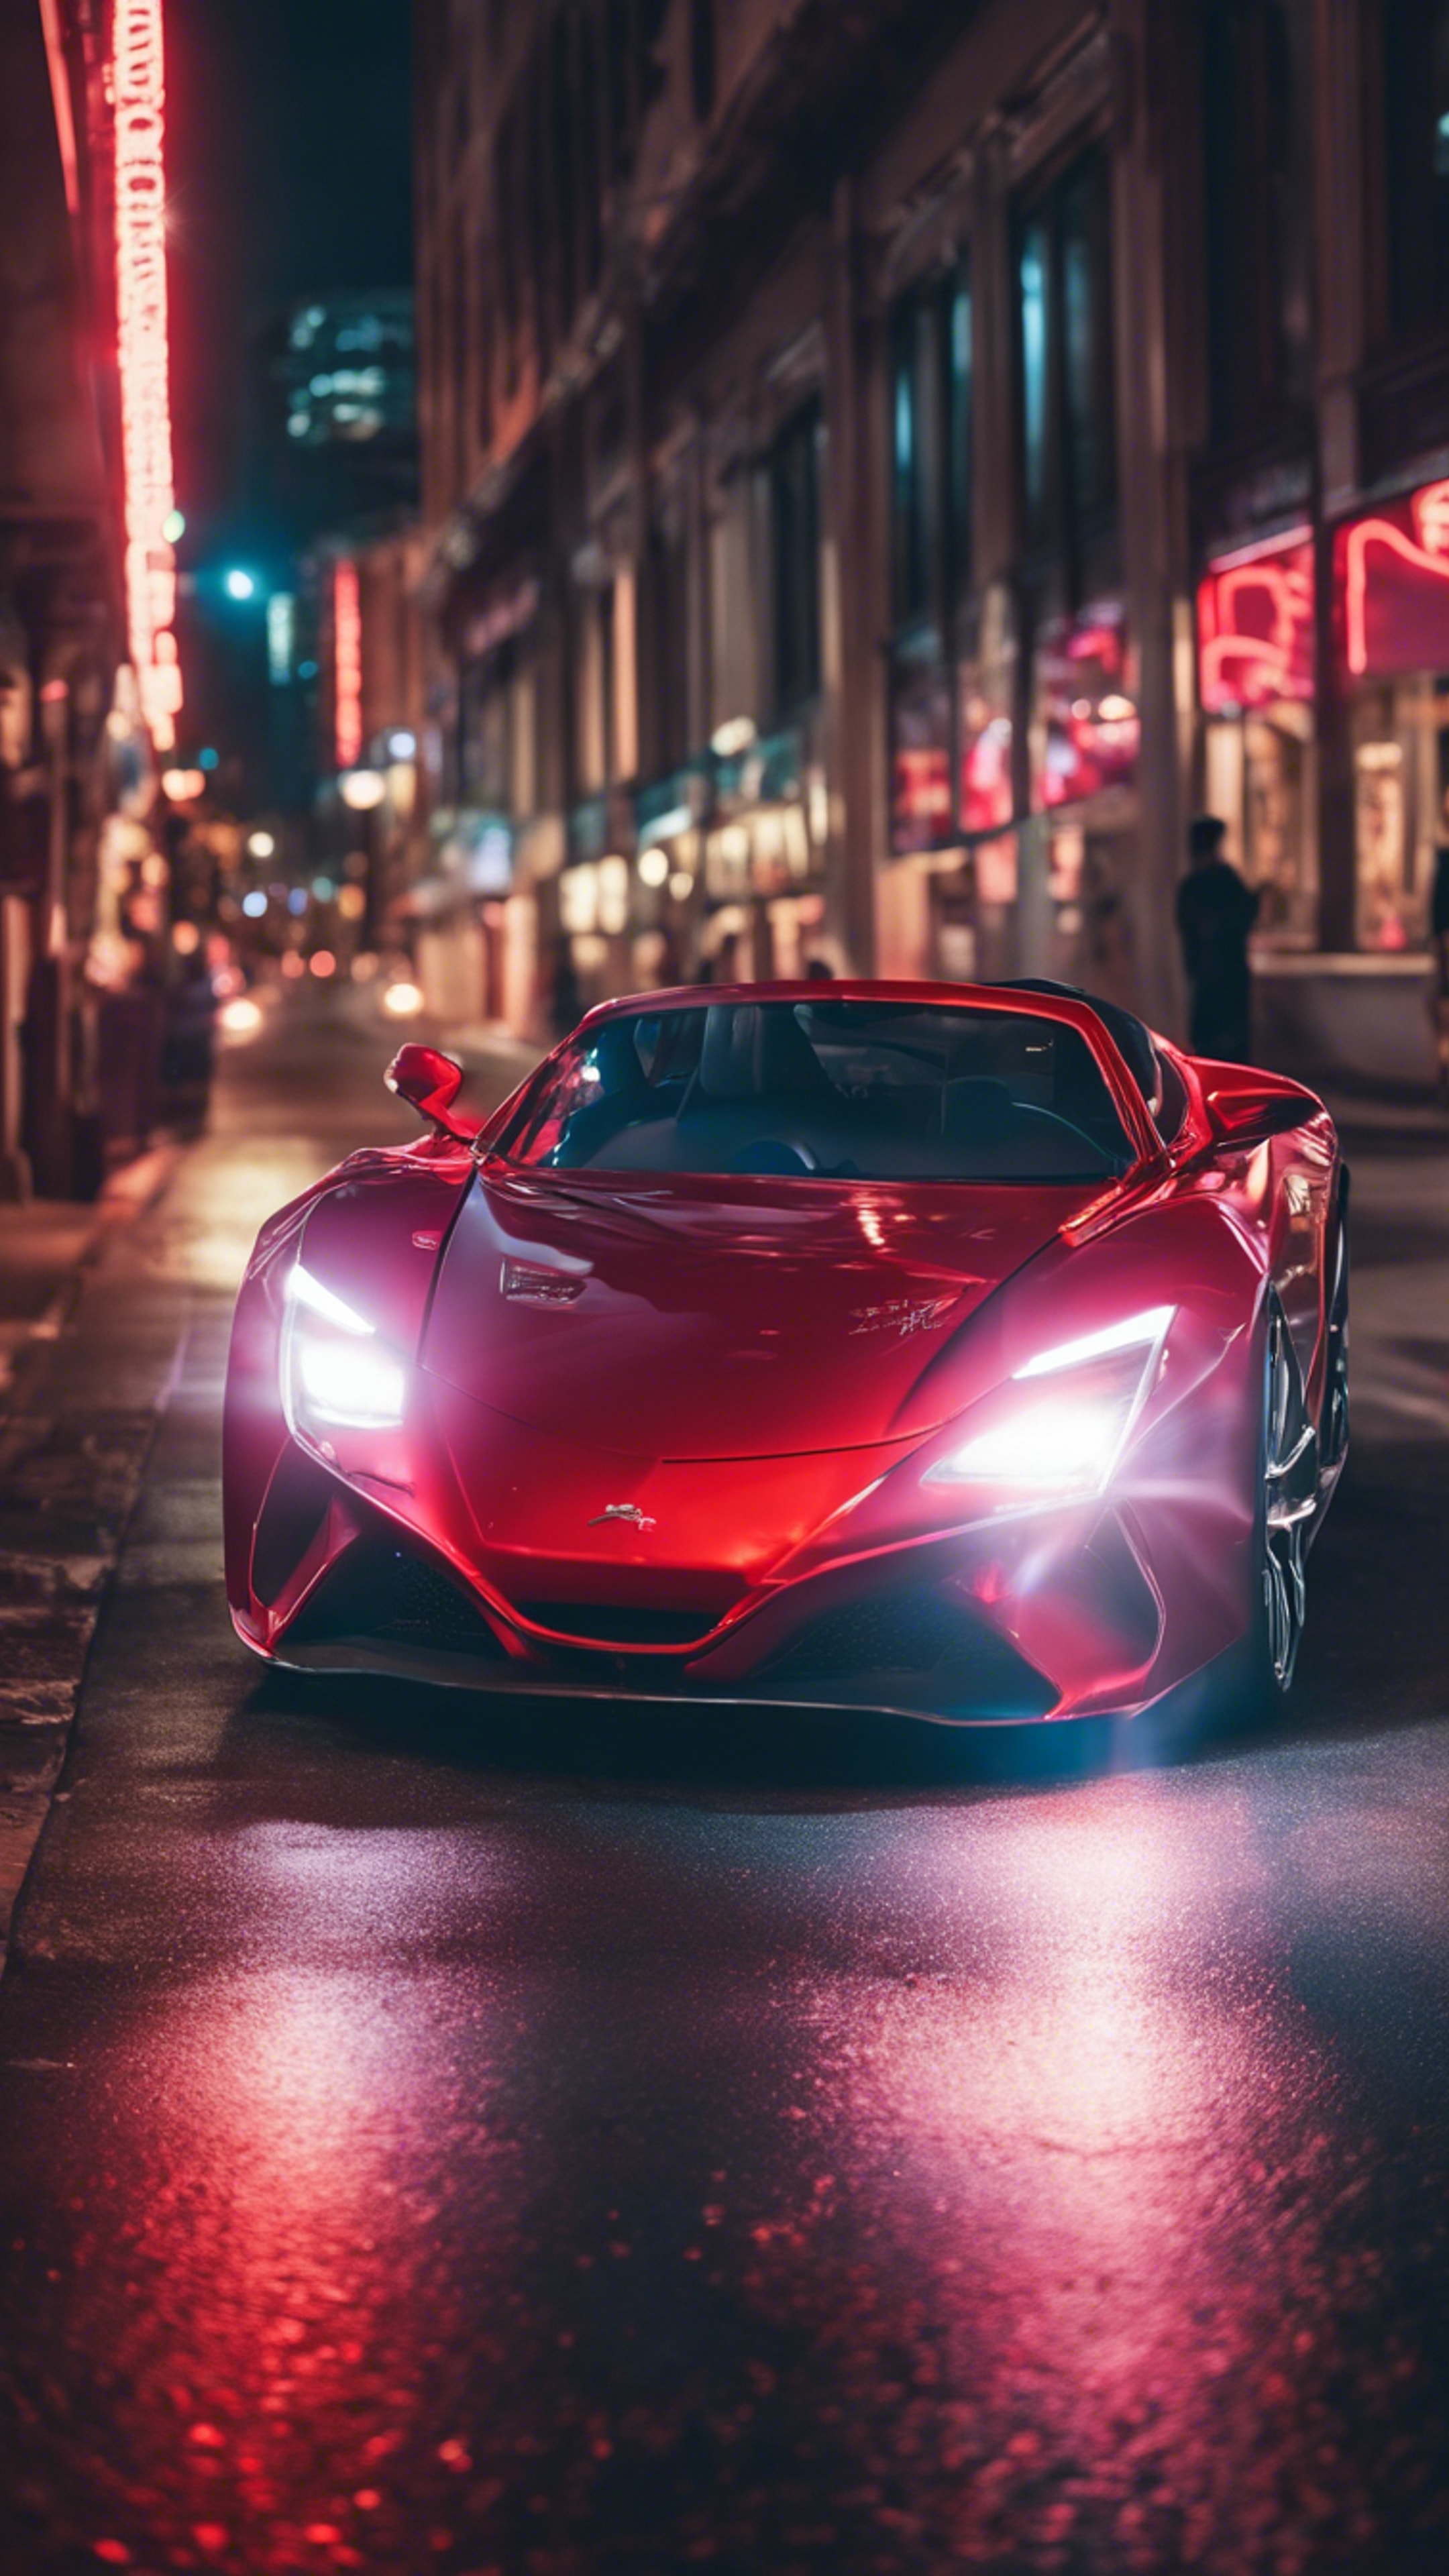 A sleek, cool red neon sports car zipping along a nighttime city street. Kertas dinding[c8ae8bc93cf04b2eb441]